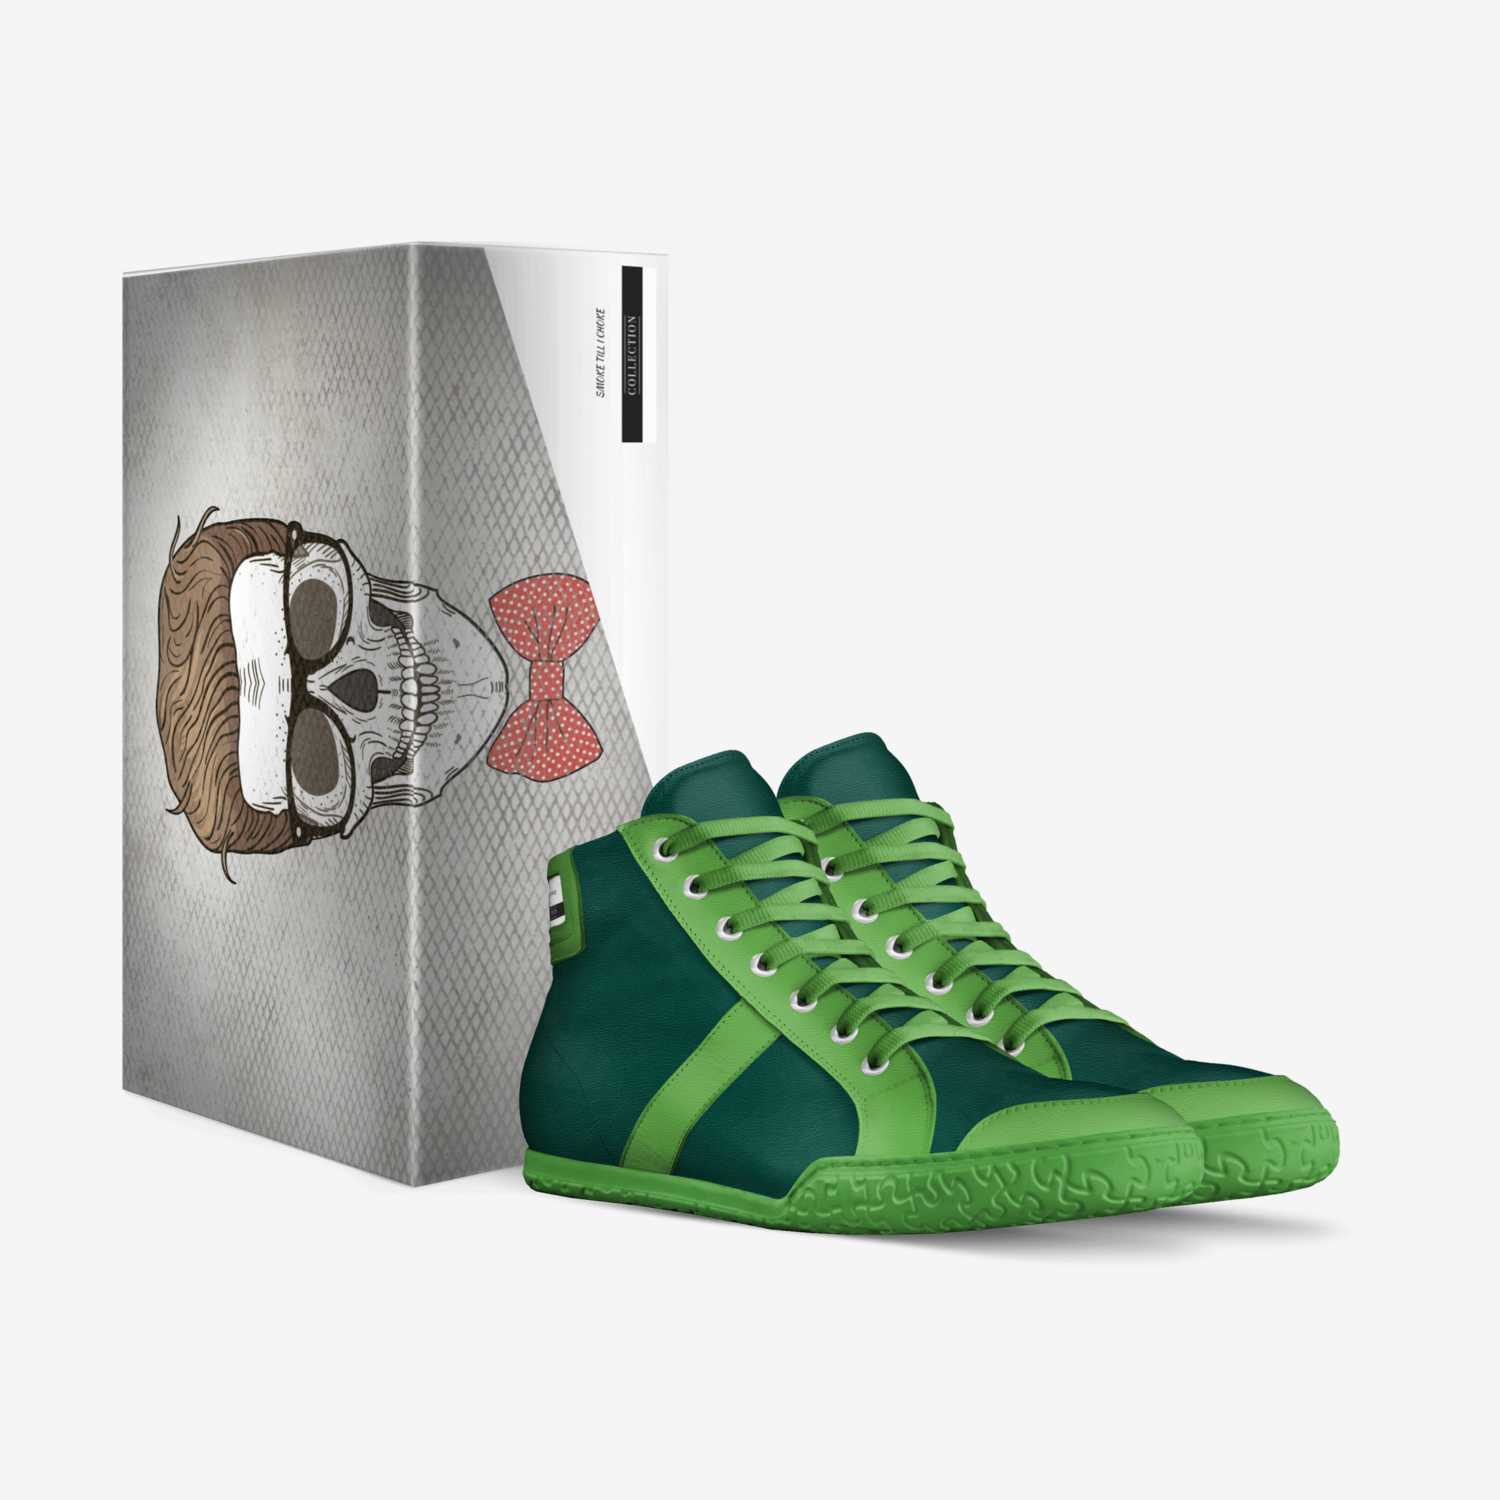 Marijuana Smoker custom made in Italy shoes by Devyn Mancilla | Box view